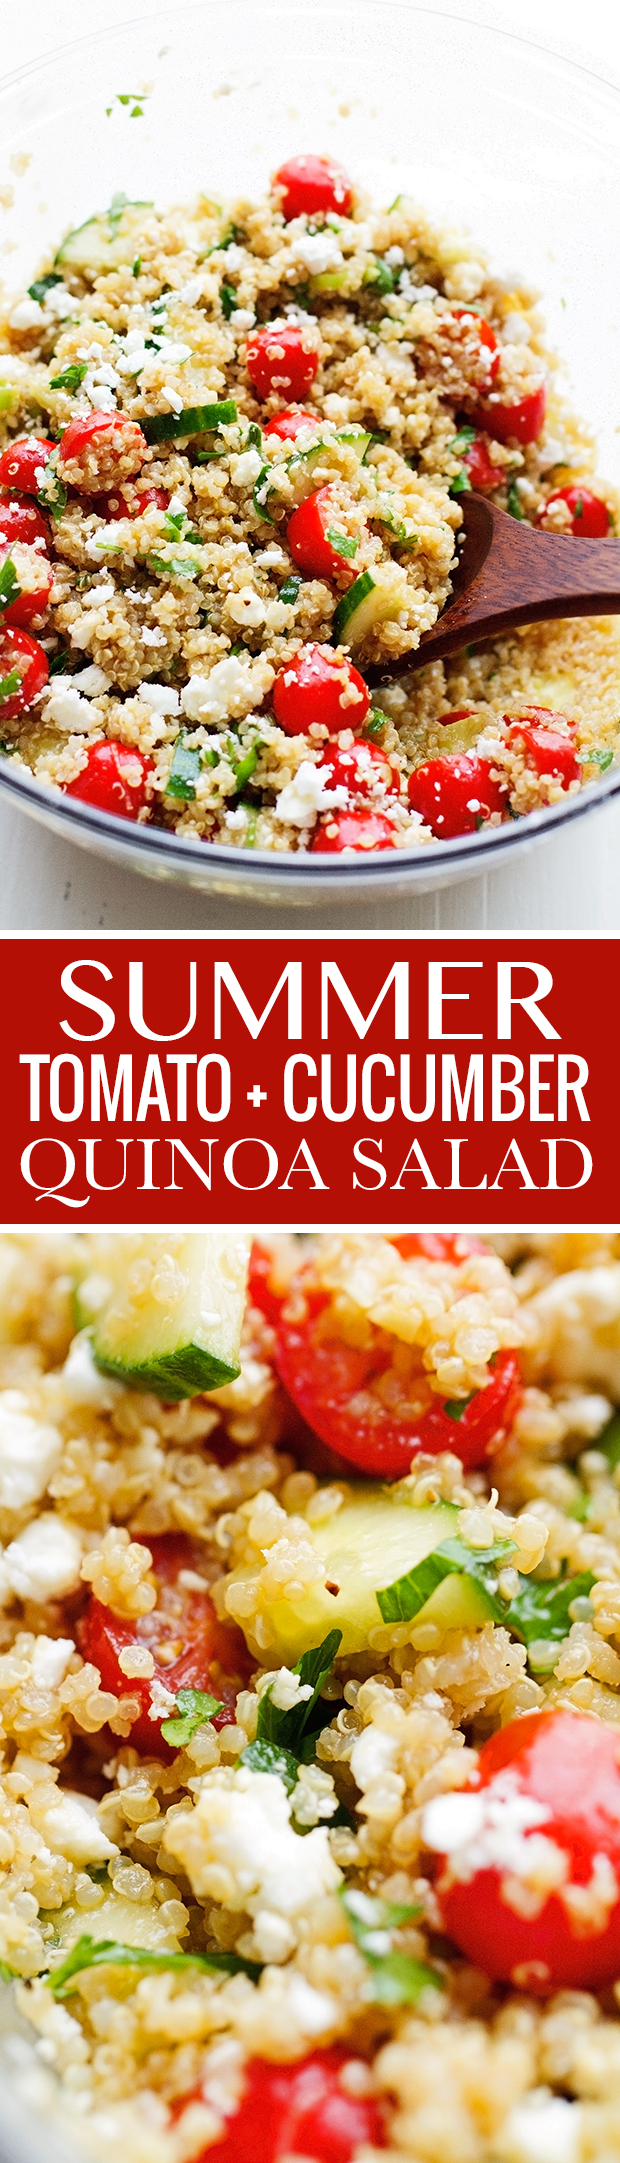 Summer Tomato and Cucumber Quinoa Salad - perfect for when you have leftover quinoa! #vegetarian #quinoasalad #cucumbersalad #tomatosalad #tabbouleh | Littlespicejar.com @LittleSpiceJar